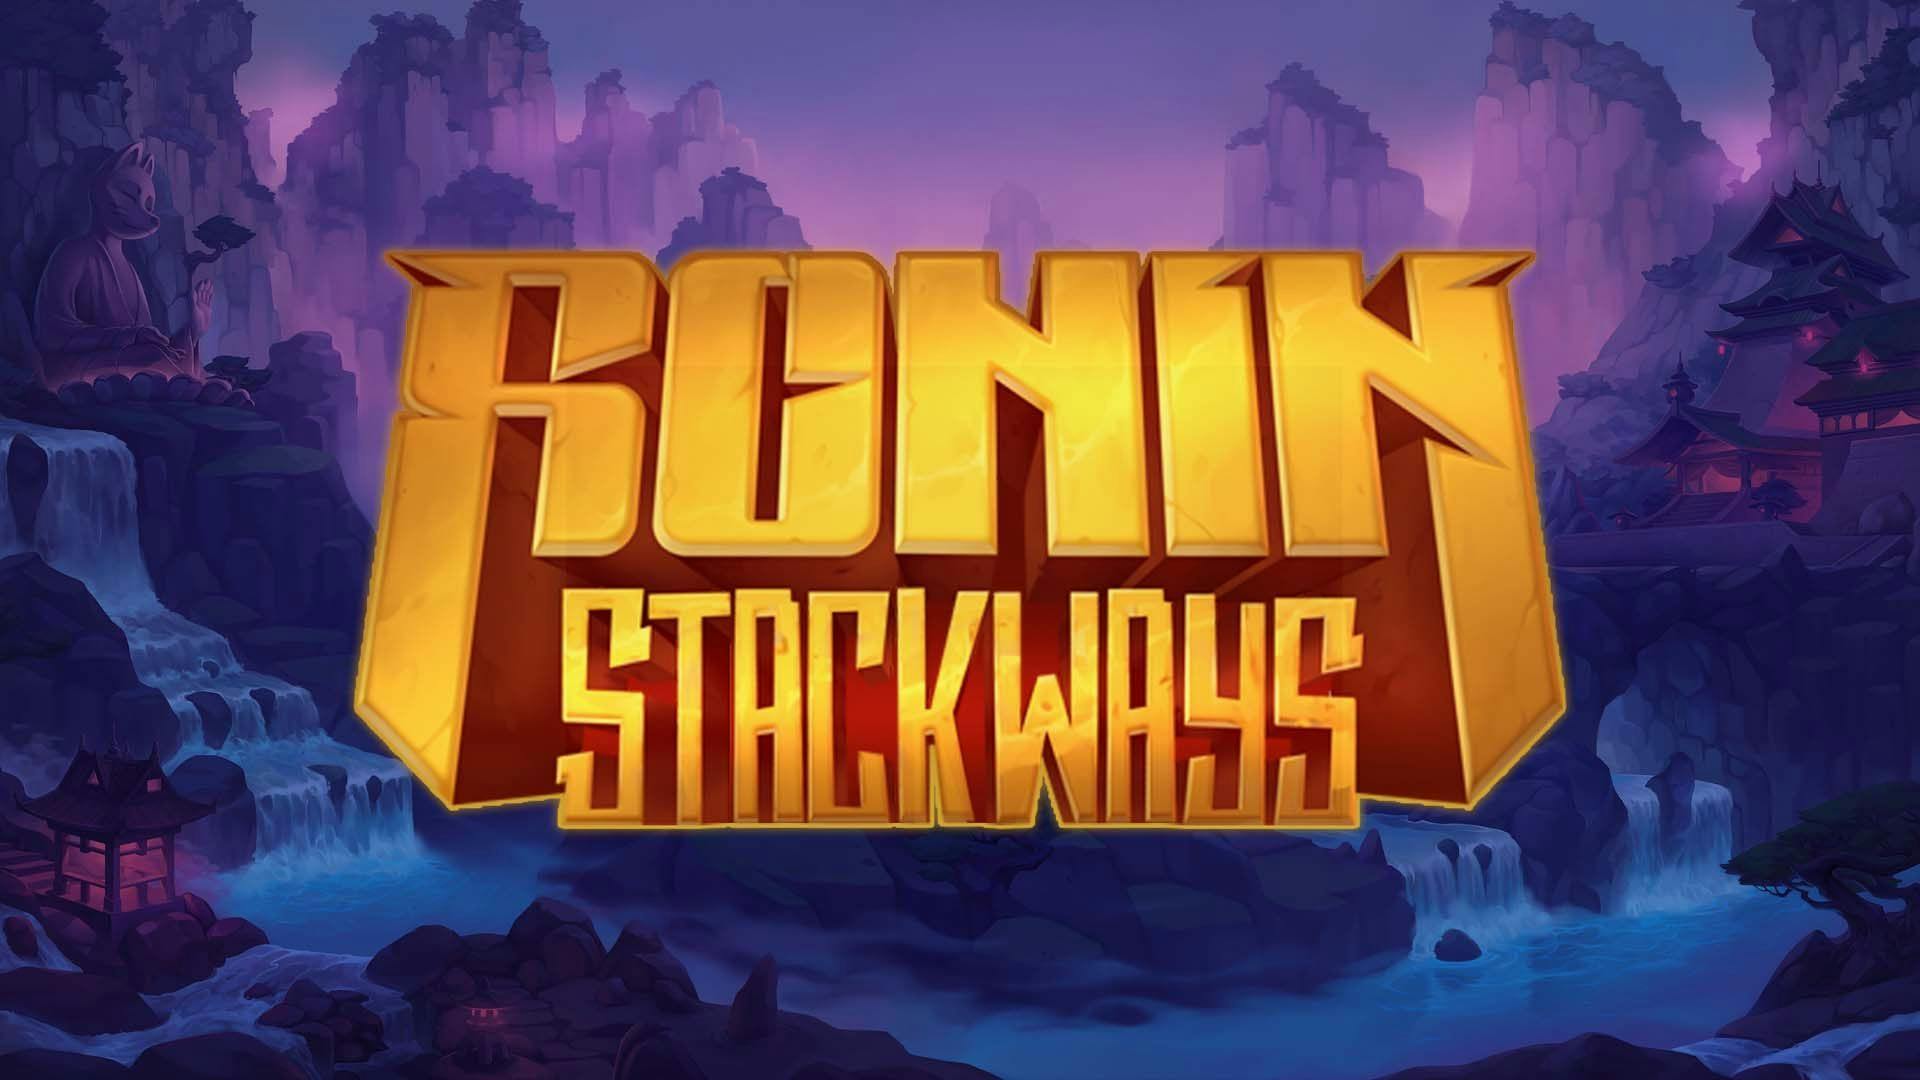 Ronin Stackways Slot Machine Online Free Game Play